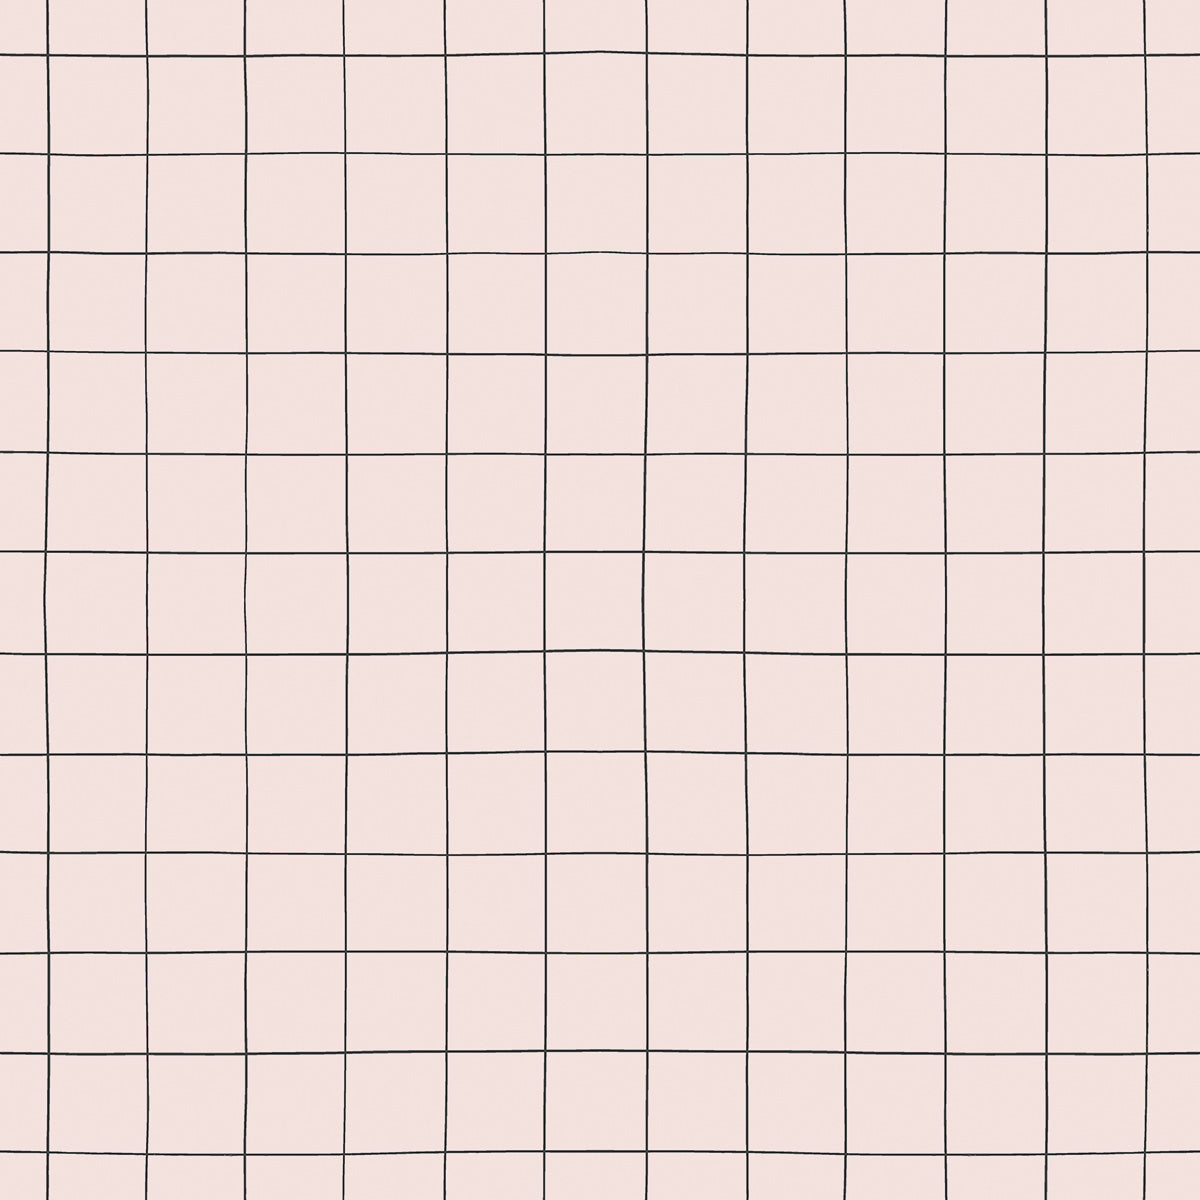 Aesthetic Grid wallpaper by RandomStuff101  Download on ZEDGE  76fa